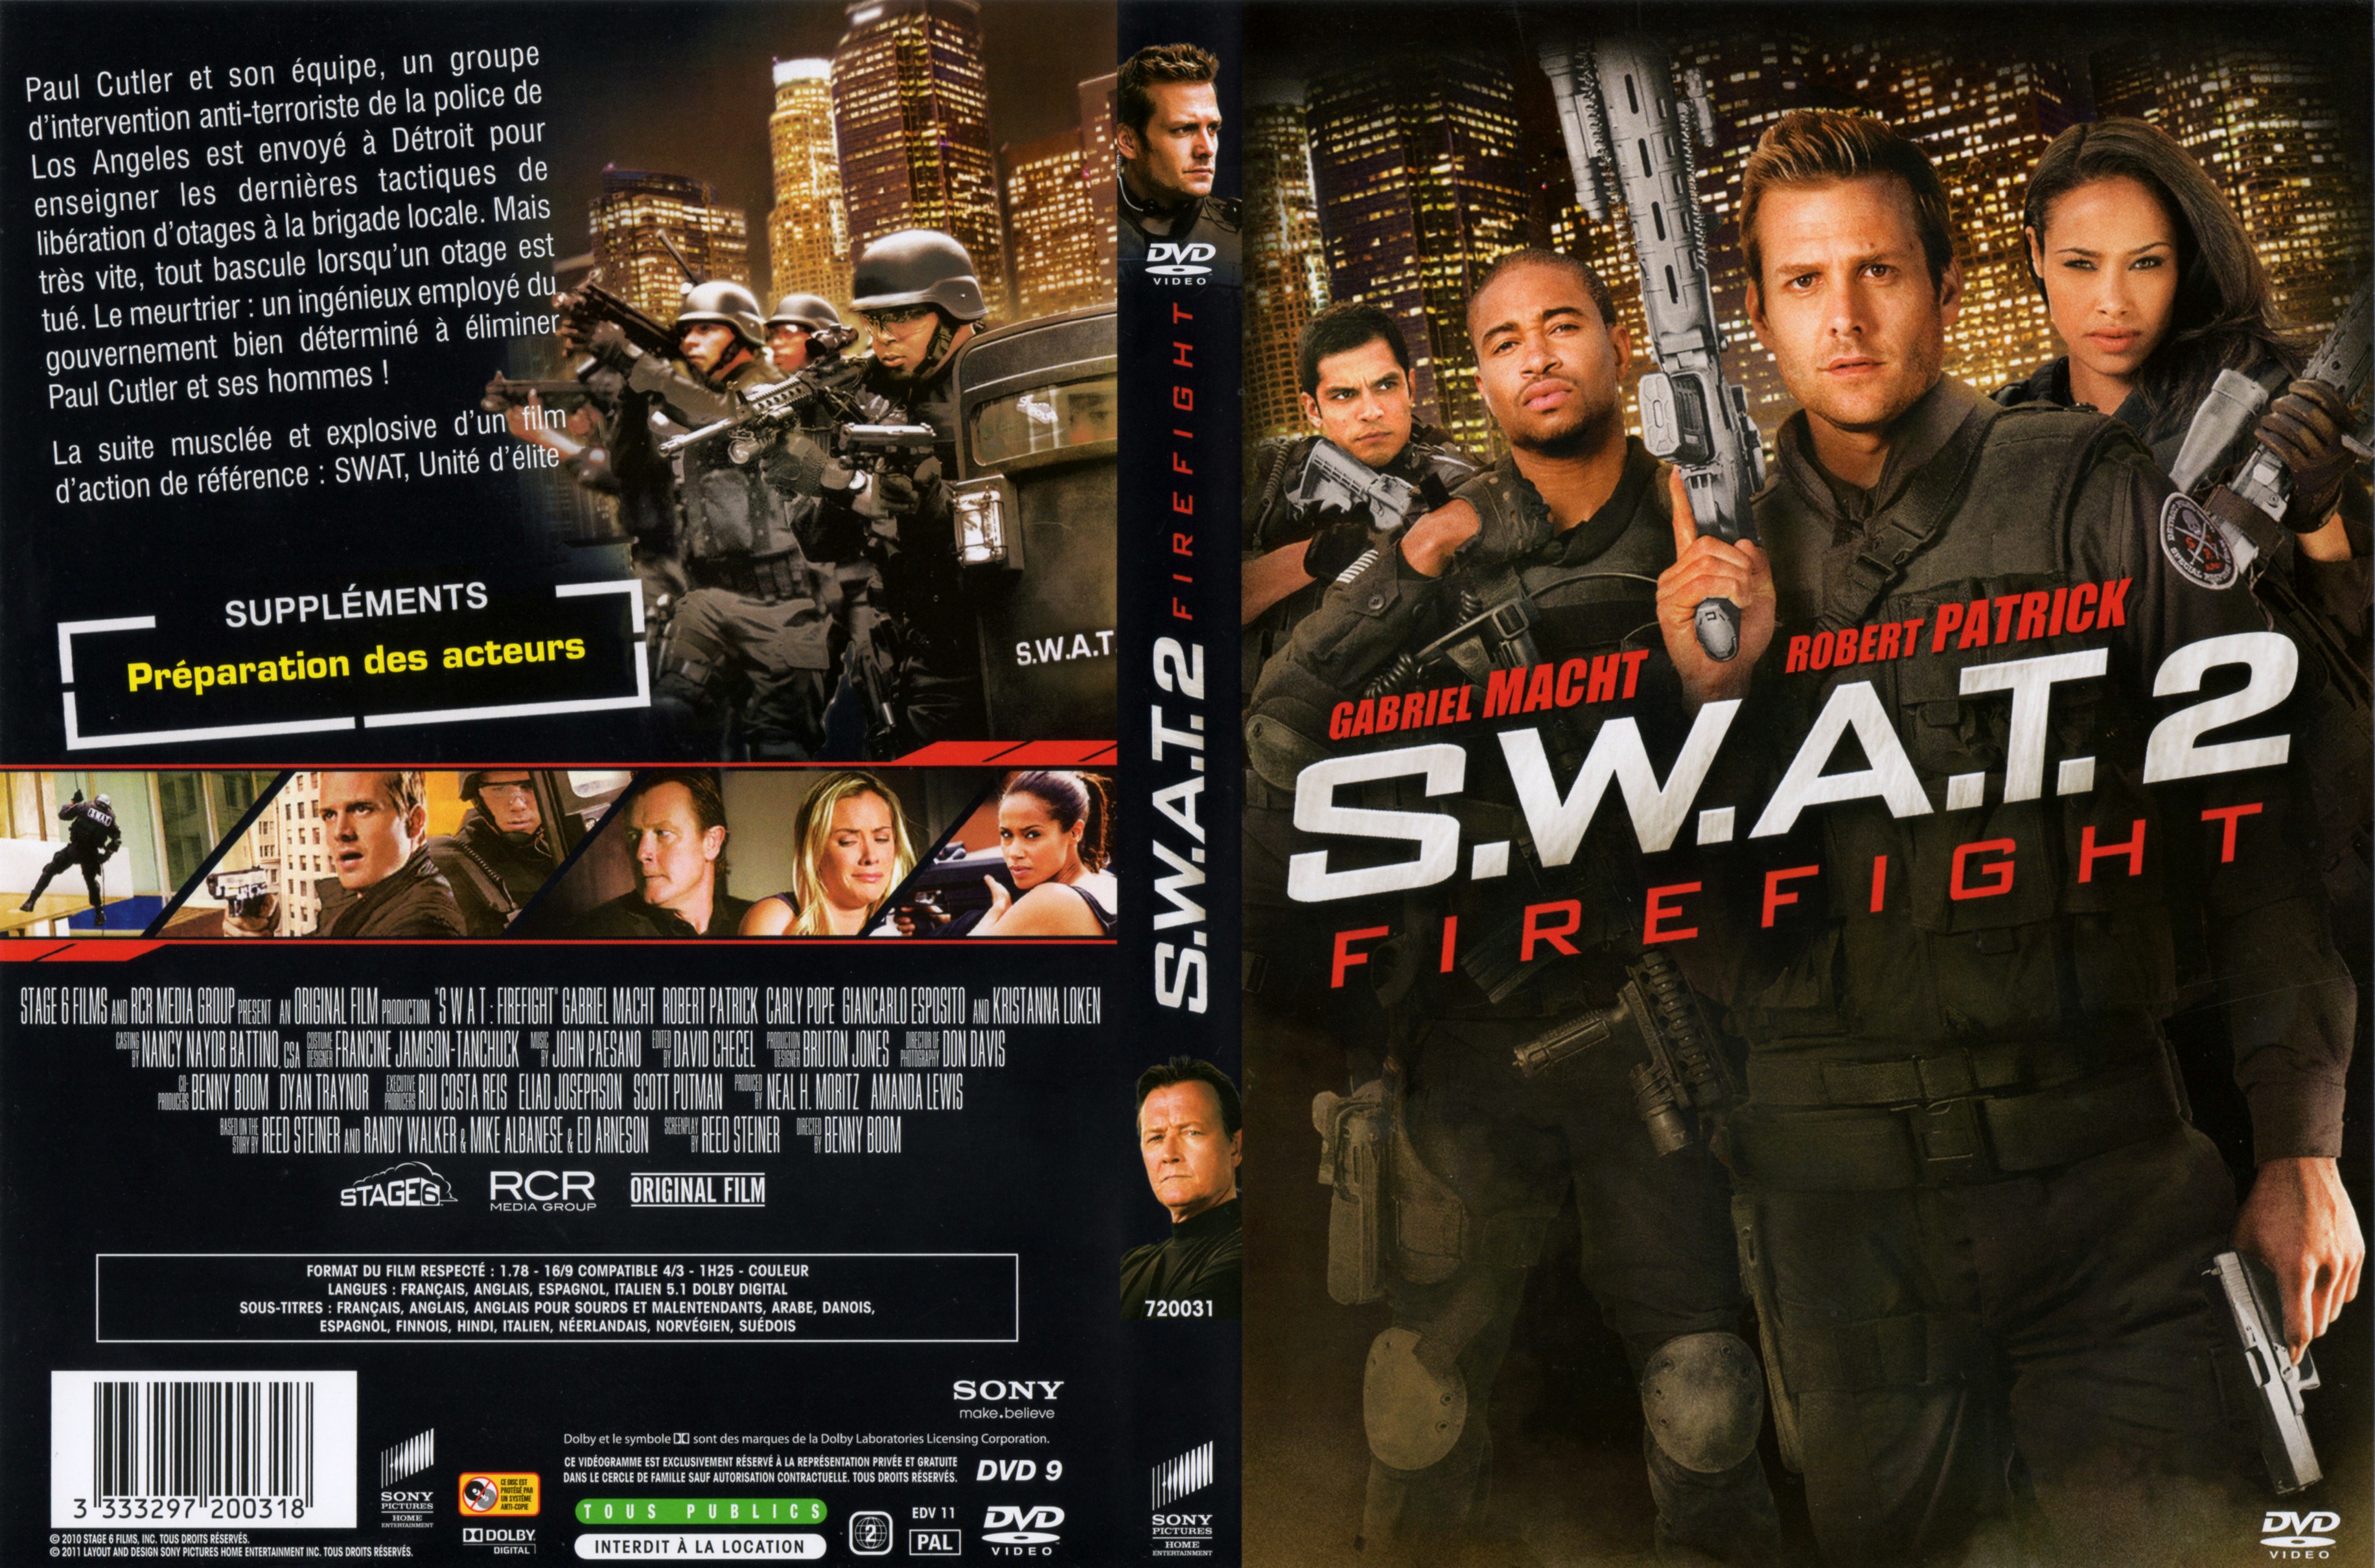 Jaquette DVD SWAT 2 firefight